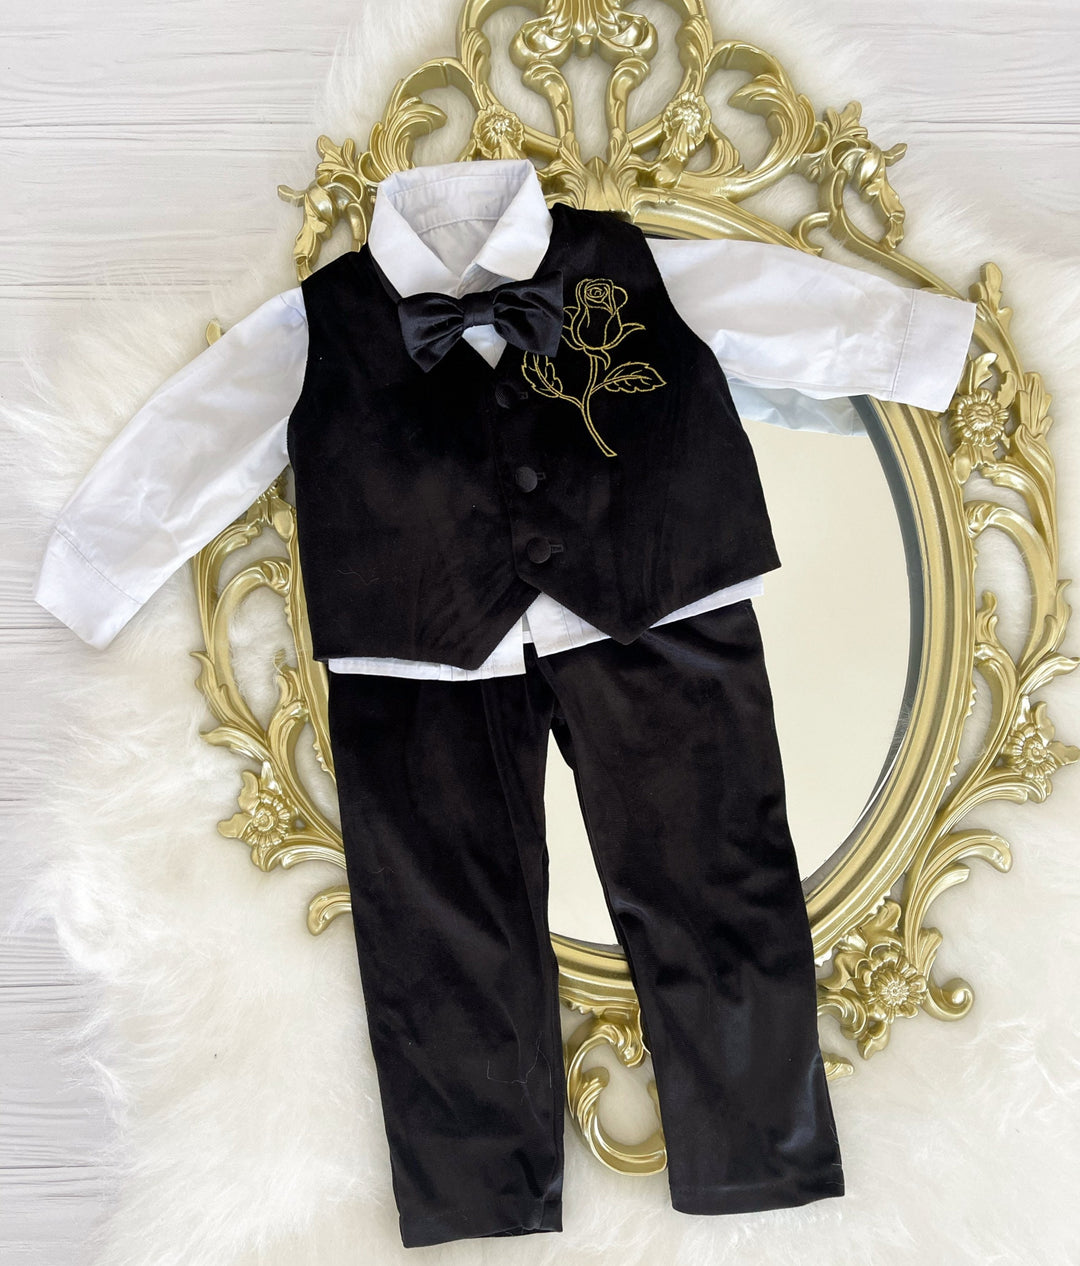 Handmade Velvet Suit Tuxedo, Dressy Outfit for Boys - Perfect for Formal Events